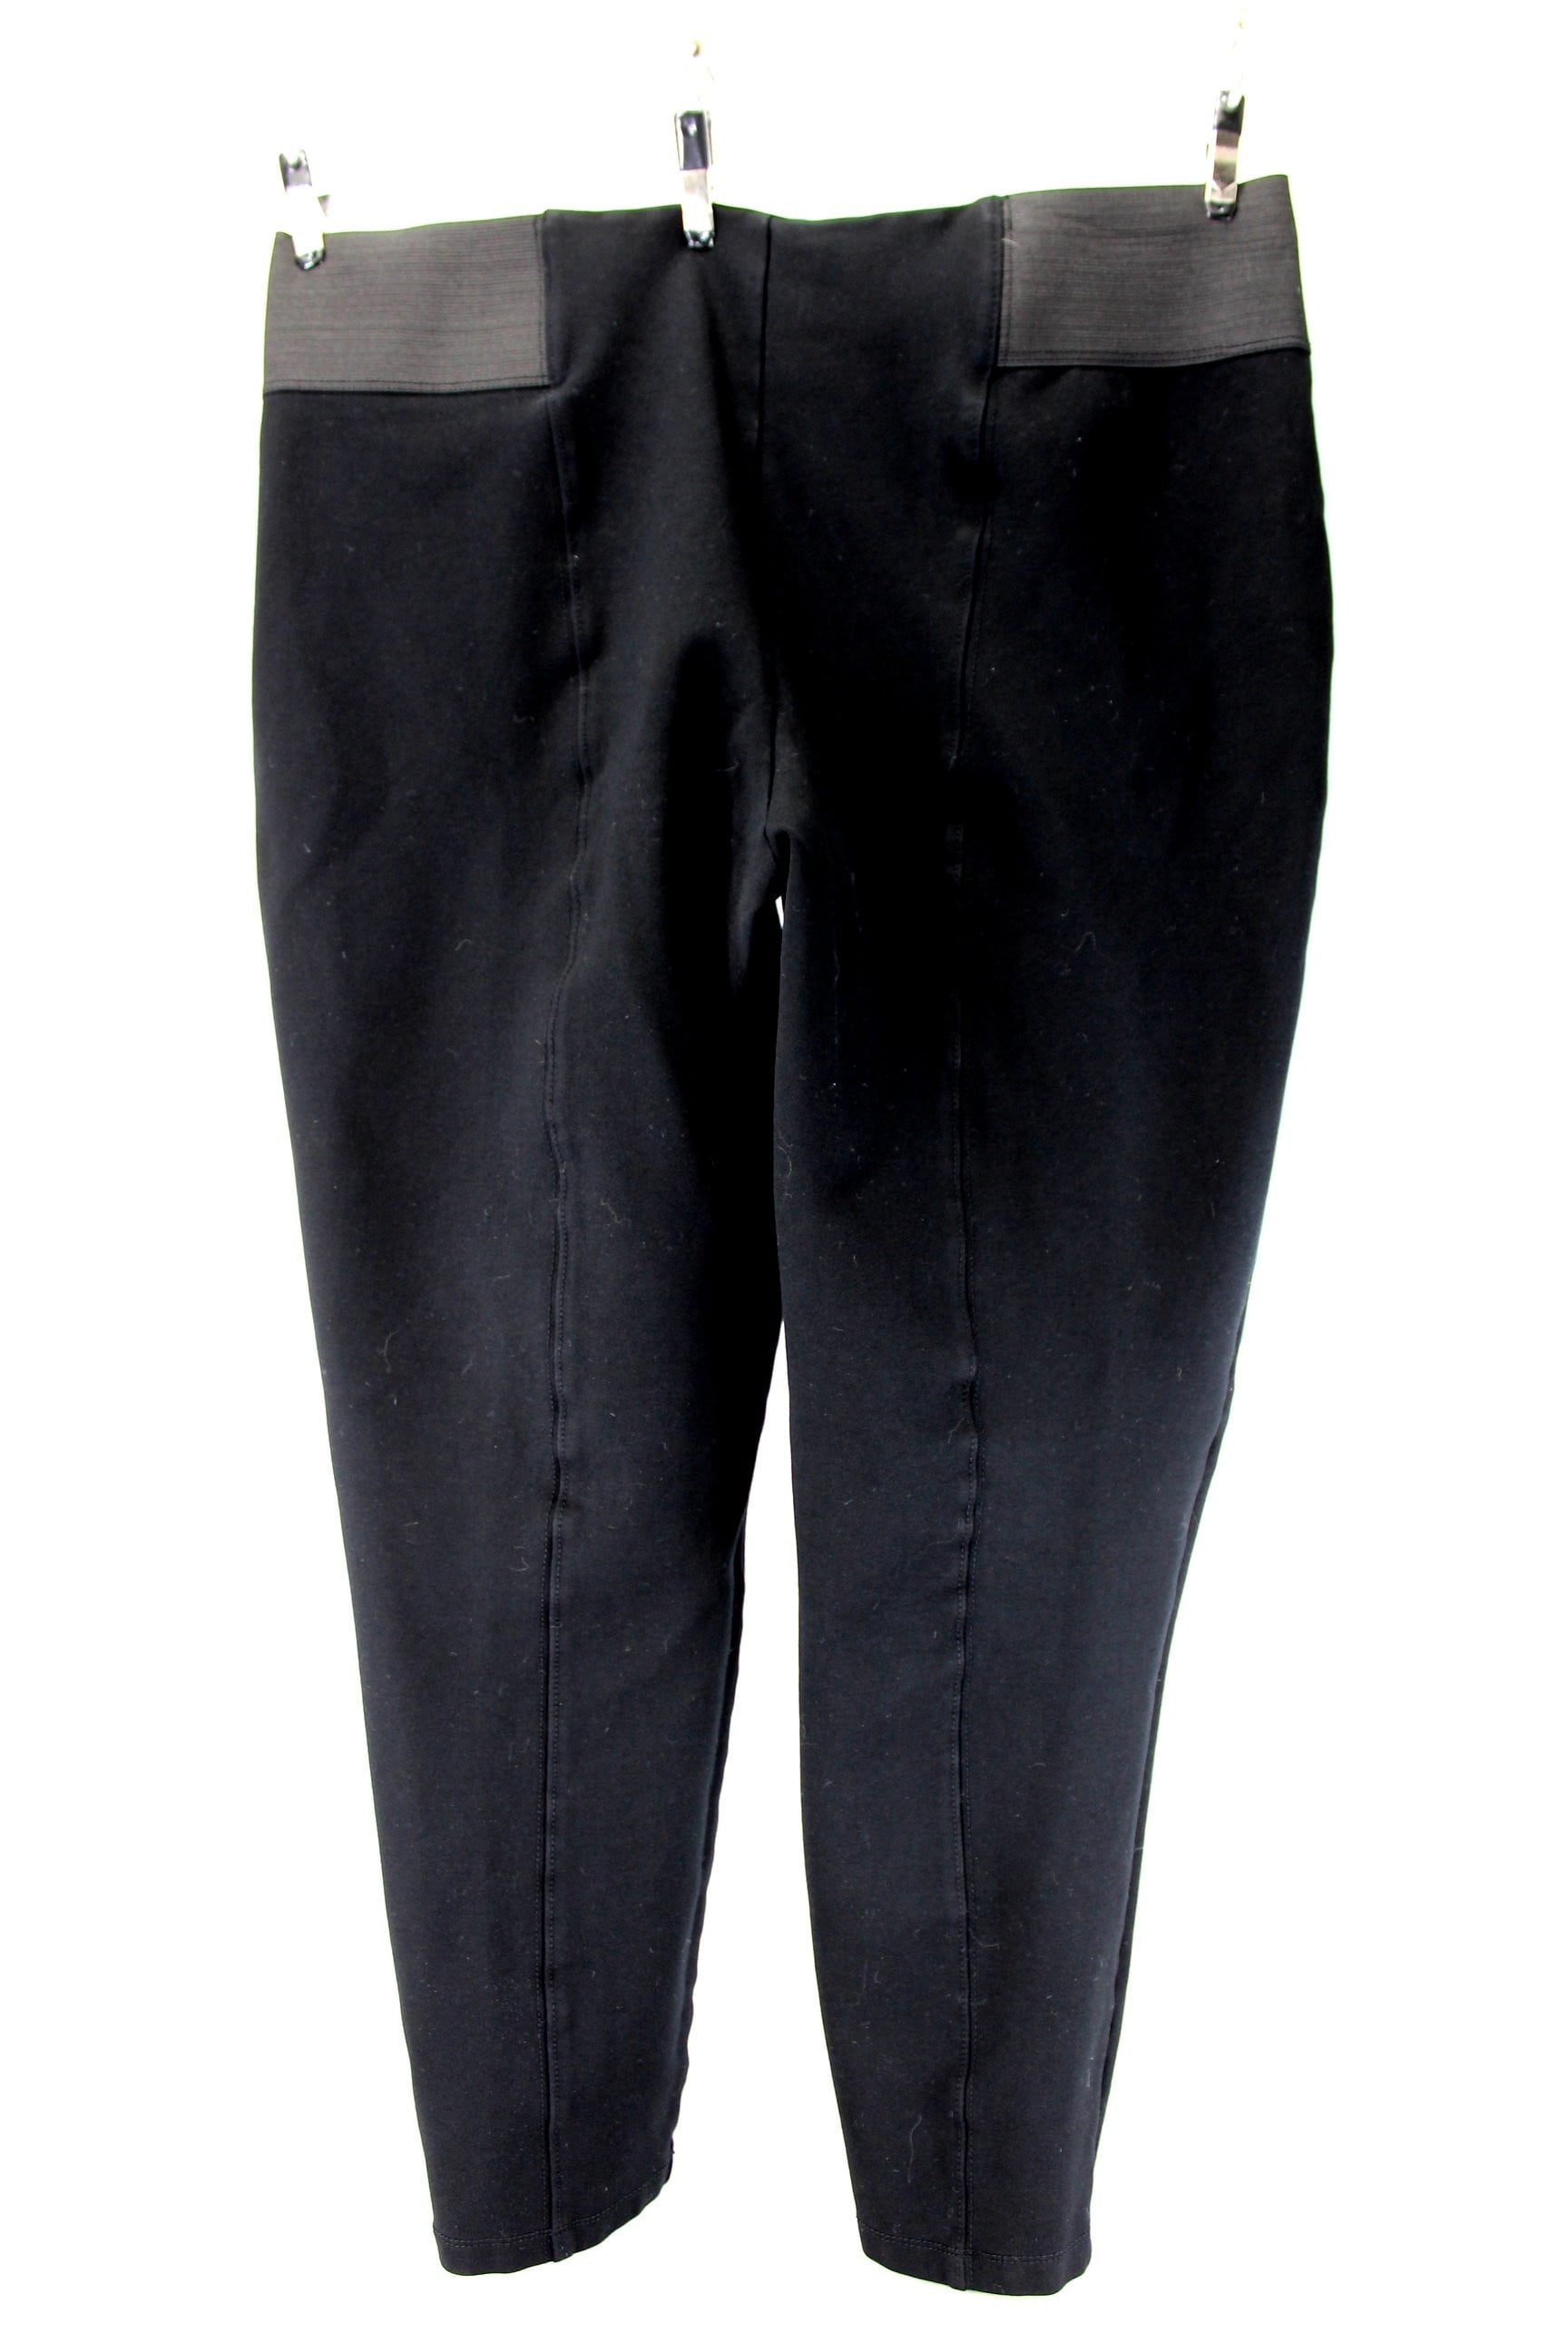 June & Hudson Black Stretch Pants Leggings - Side Elastic - Rayon